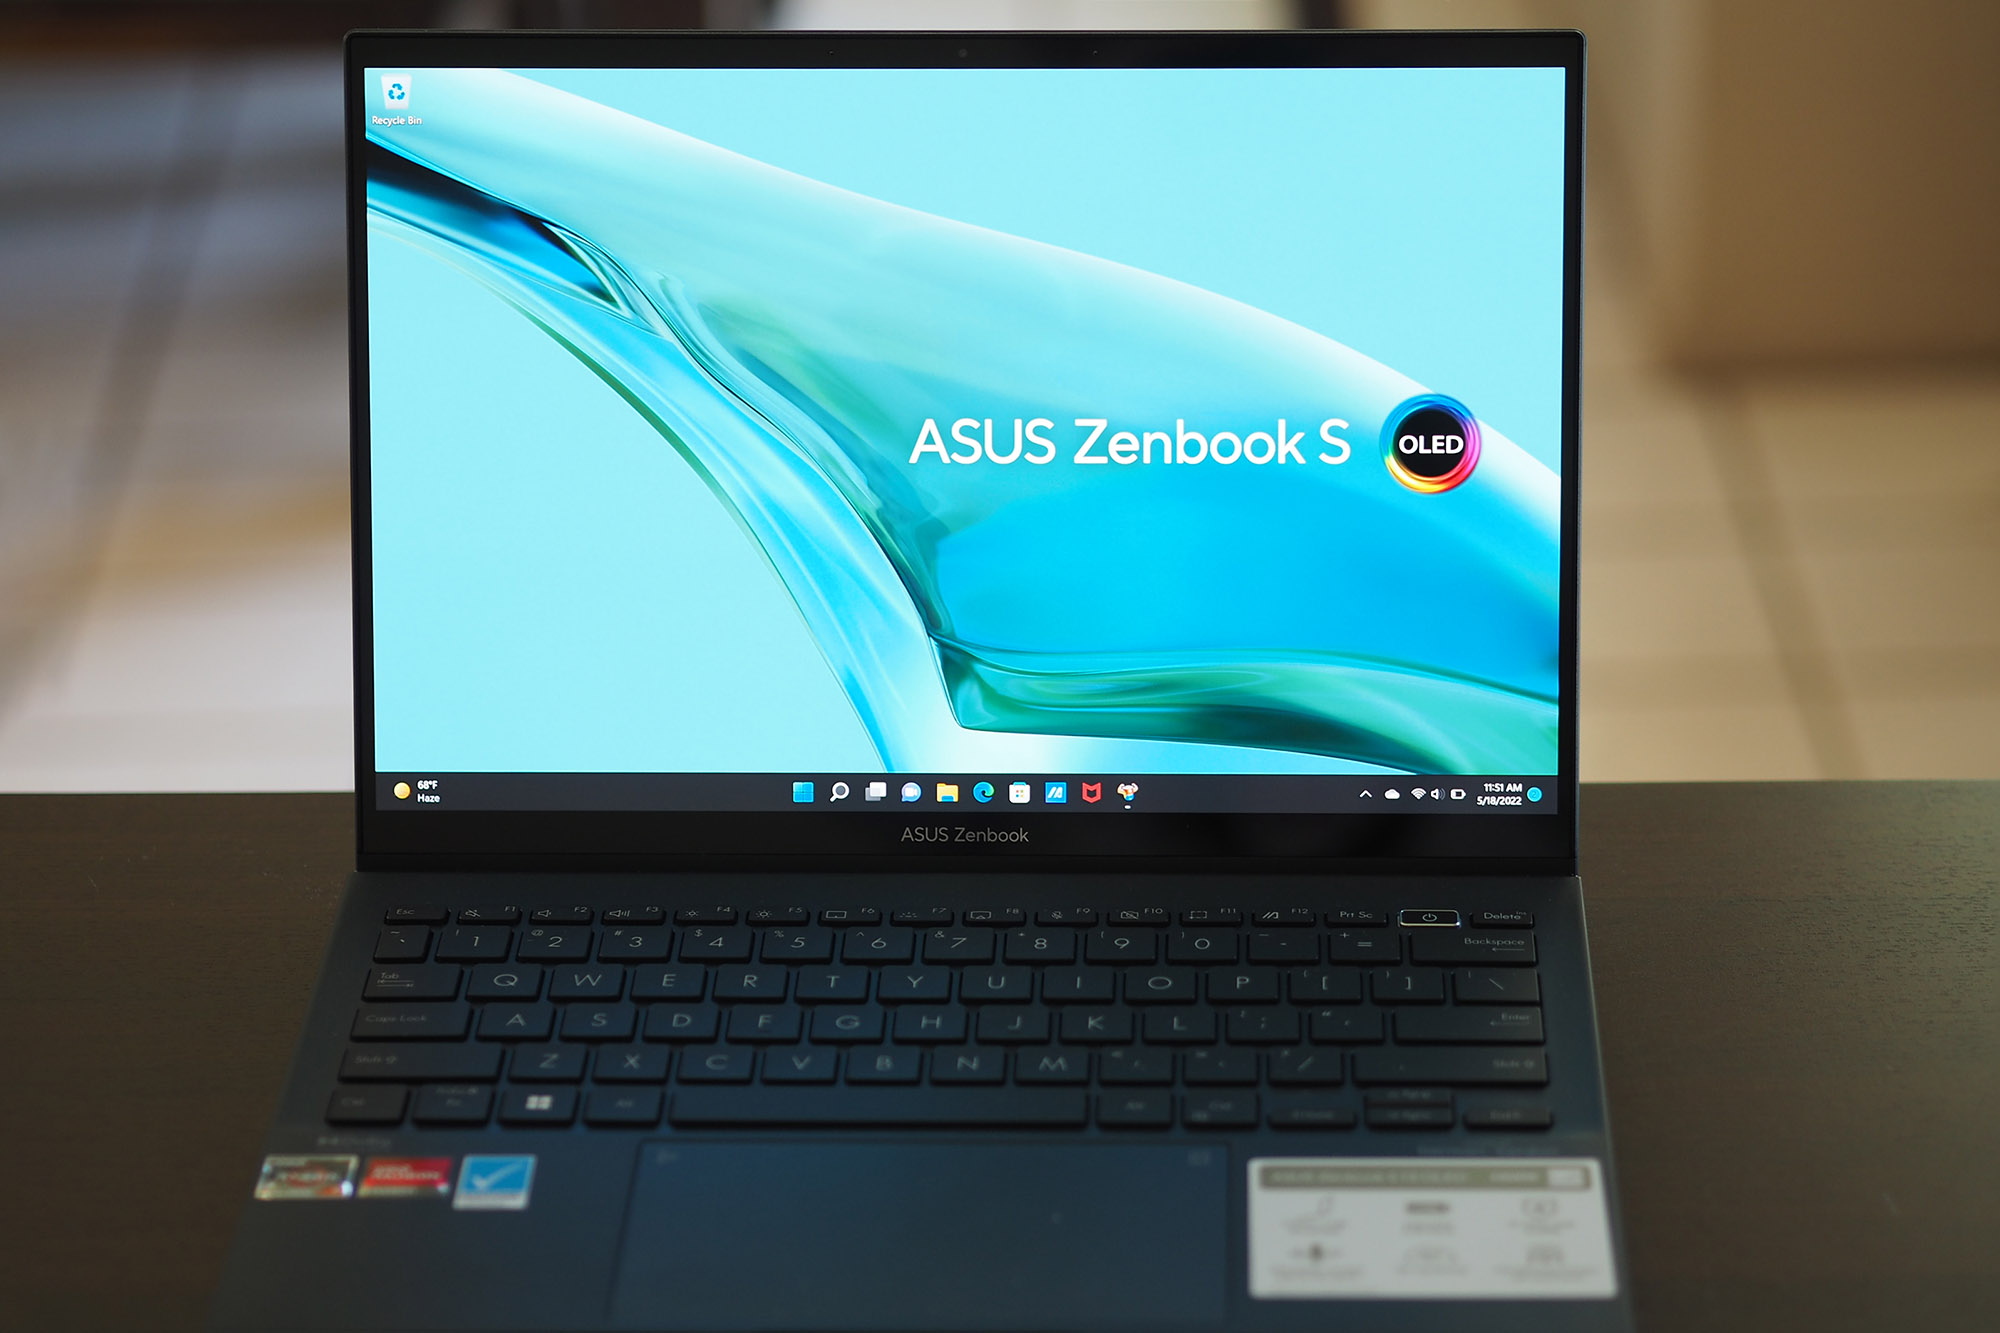 Asus Zenbook S 13 OLED UM5302 front view showing display.